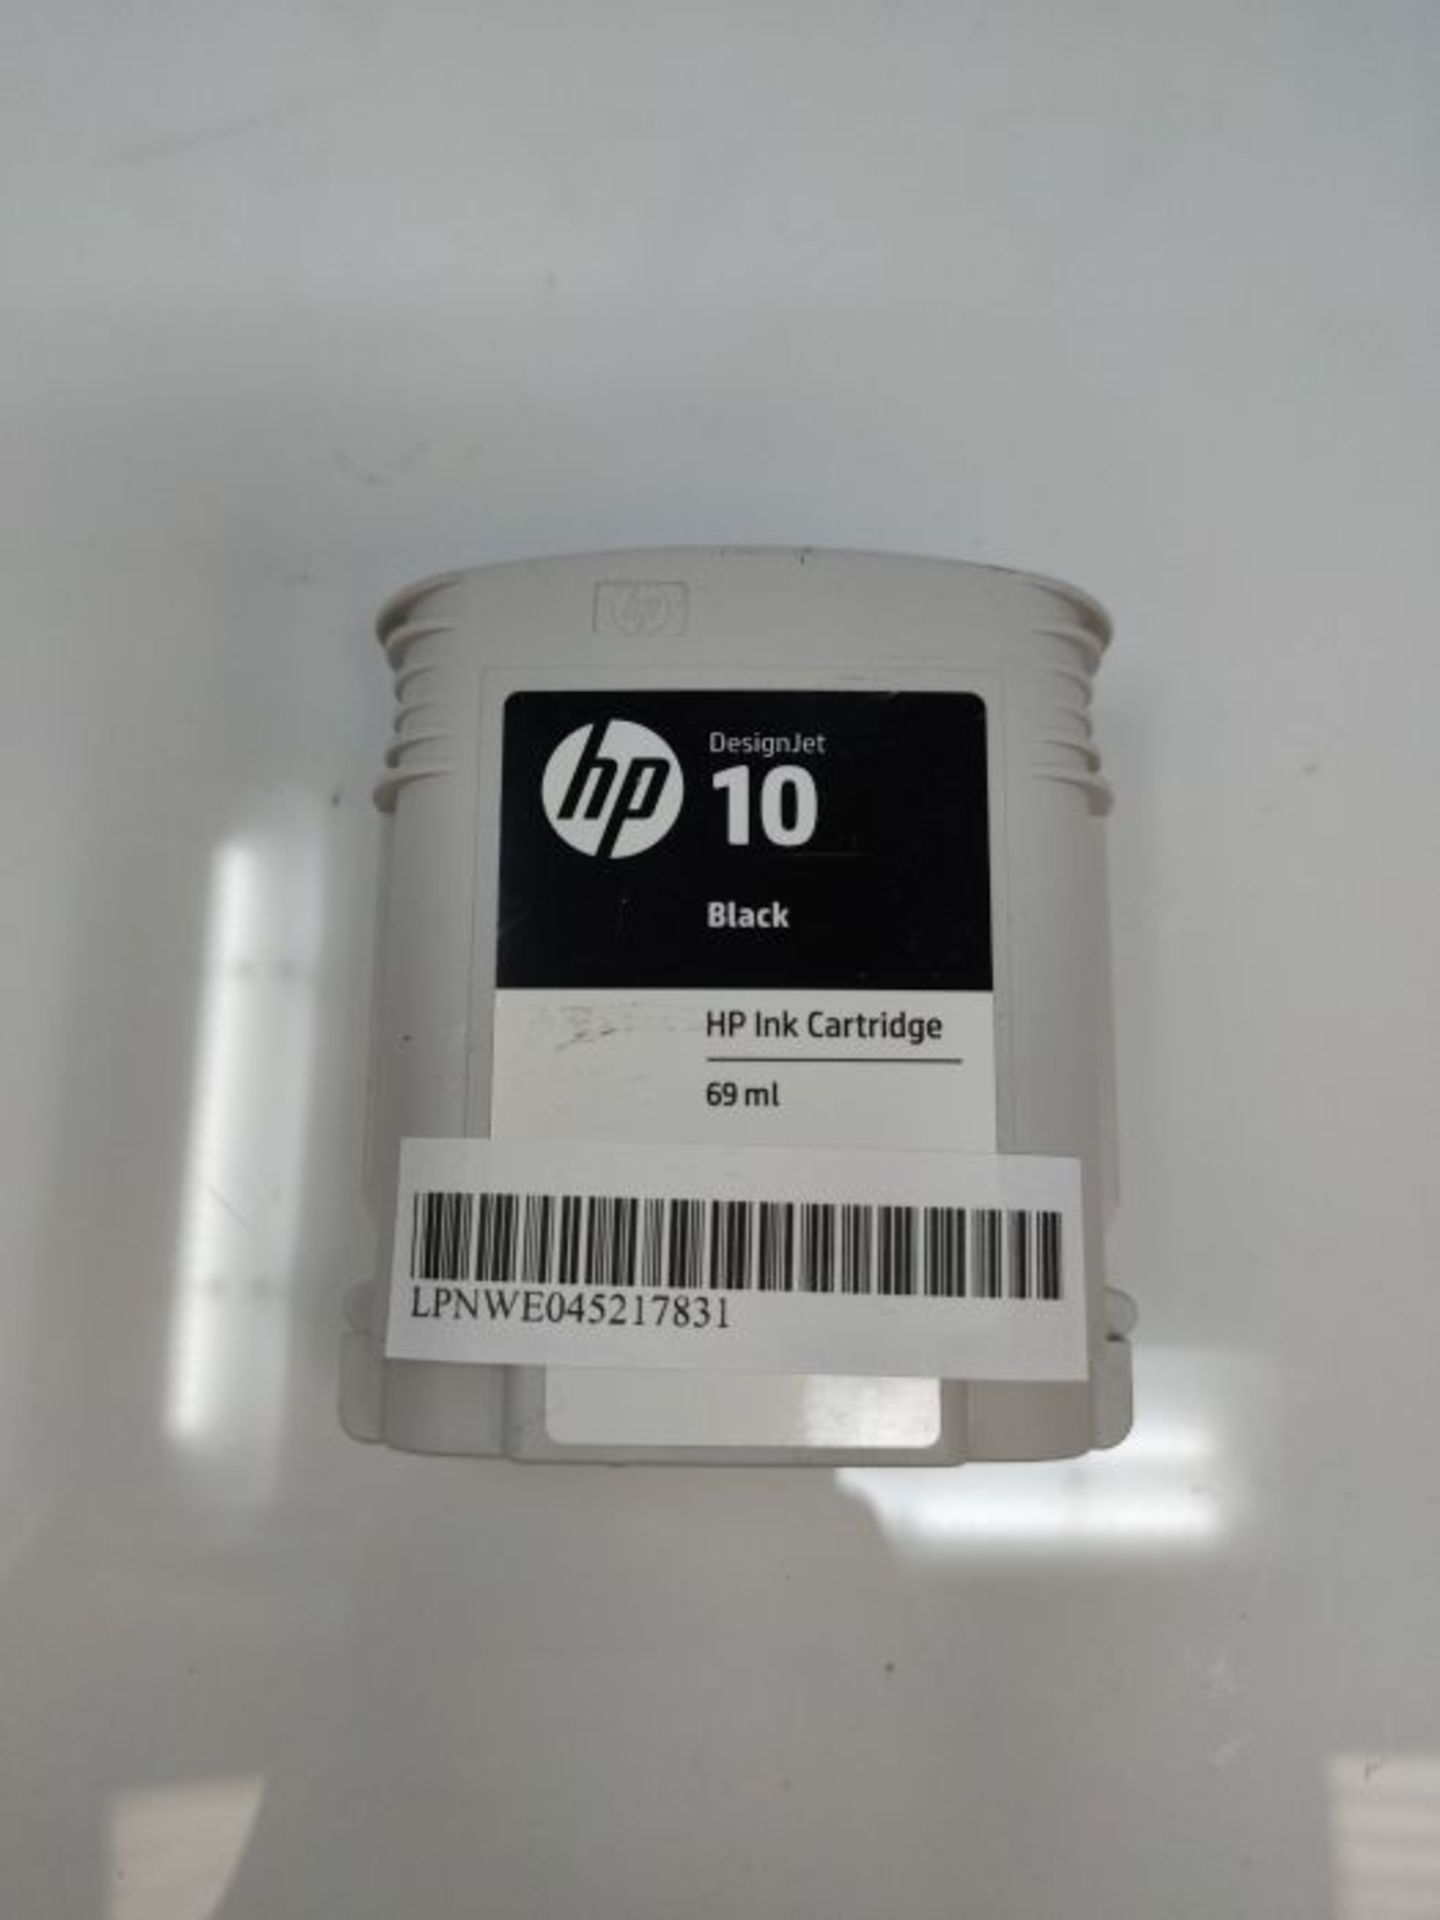 HP Original 10 Black Ink Cartridge 69 ml C4844A - Image 2 of 2